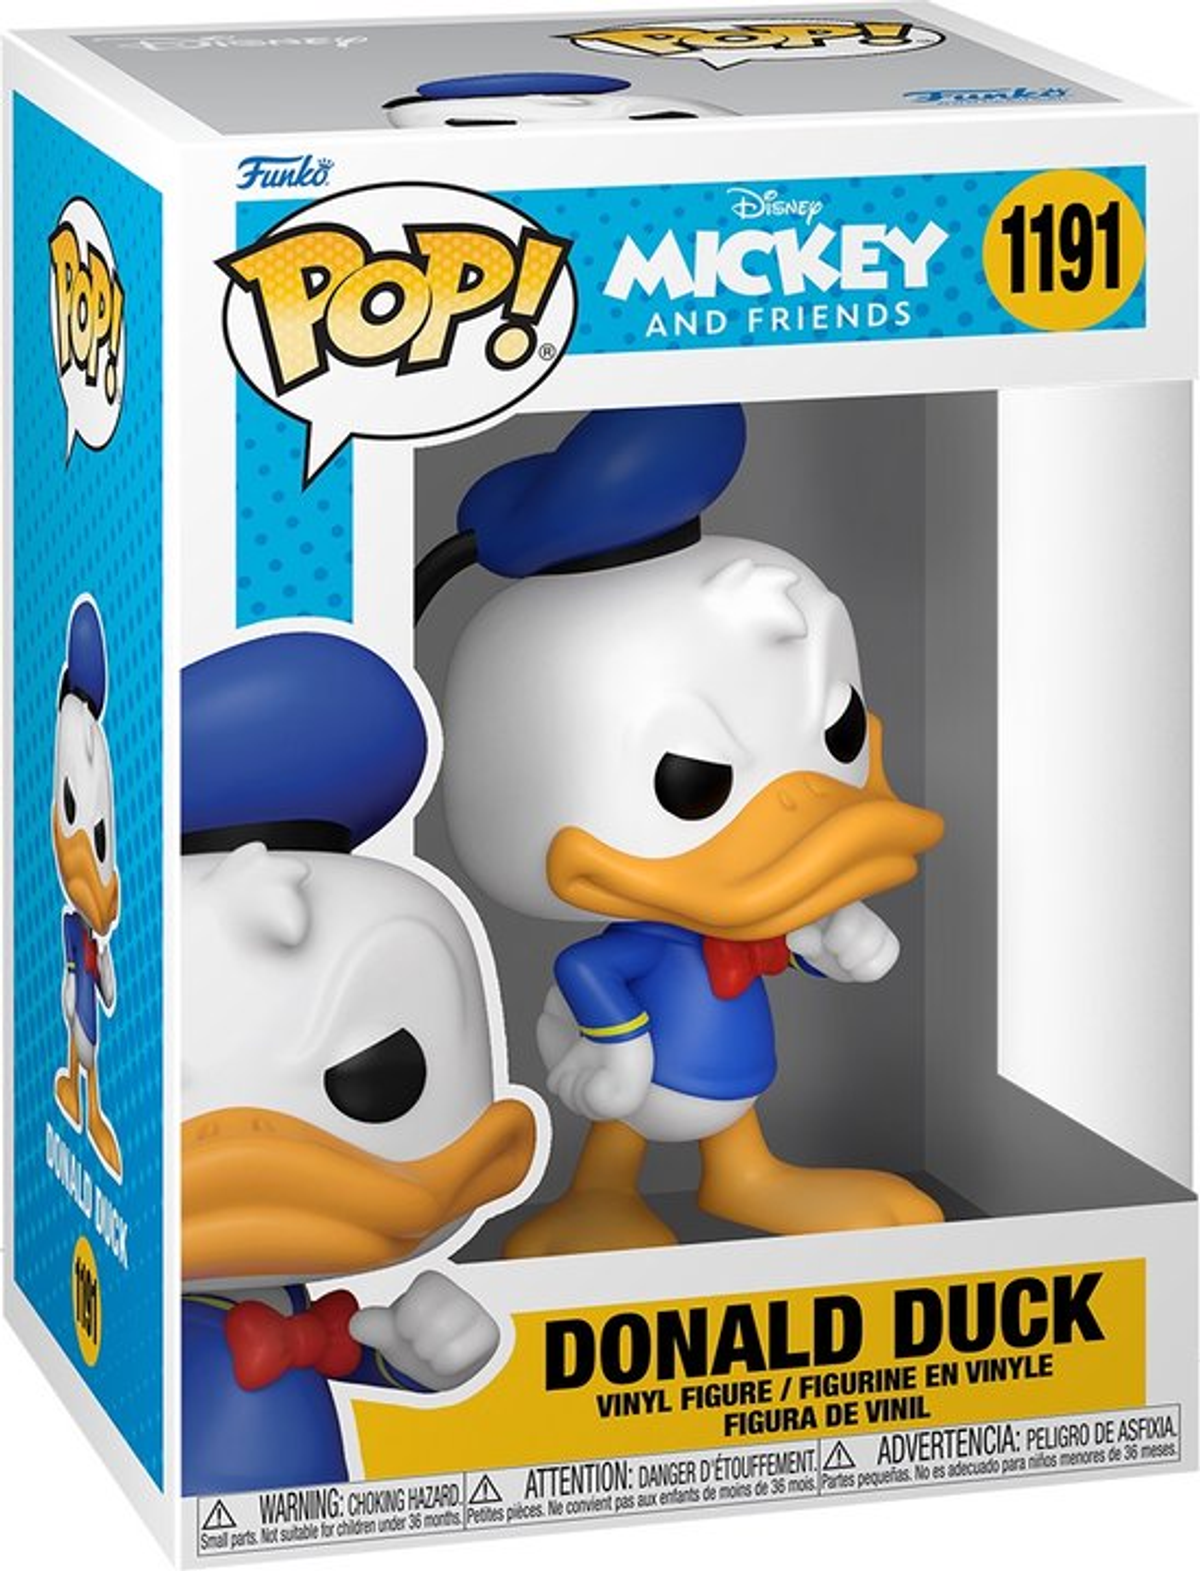 Friends Mickey - - and POP Donald Disney Duck